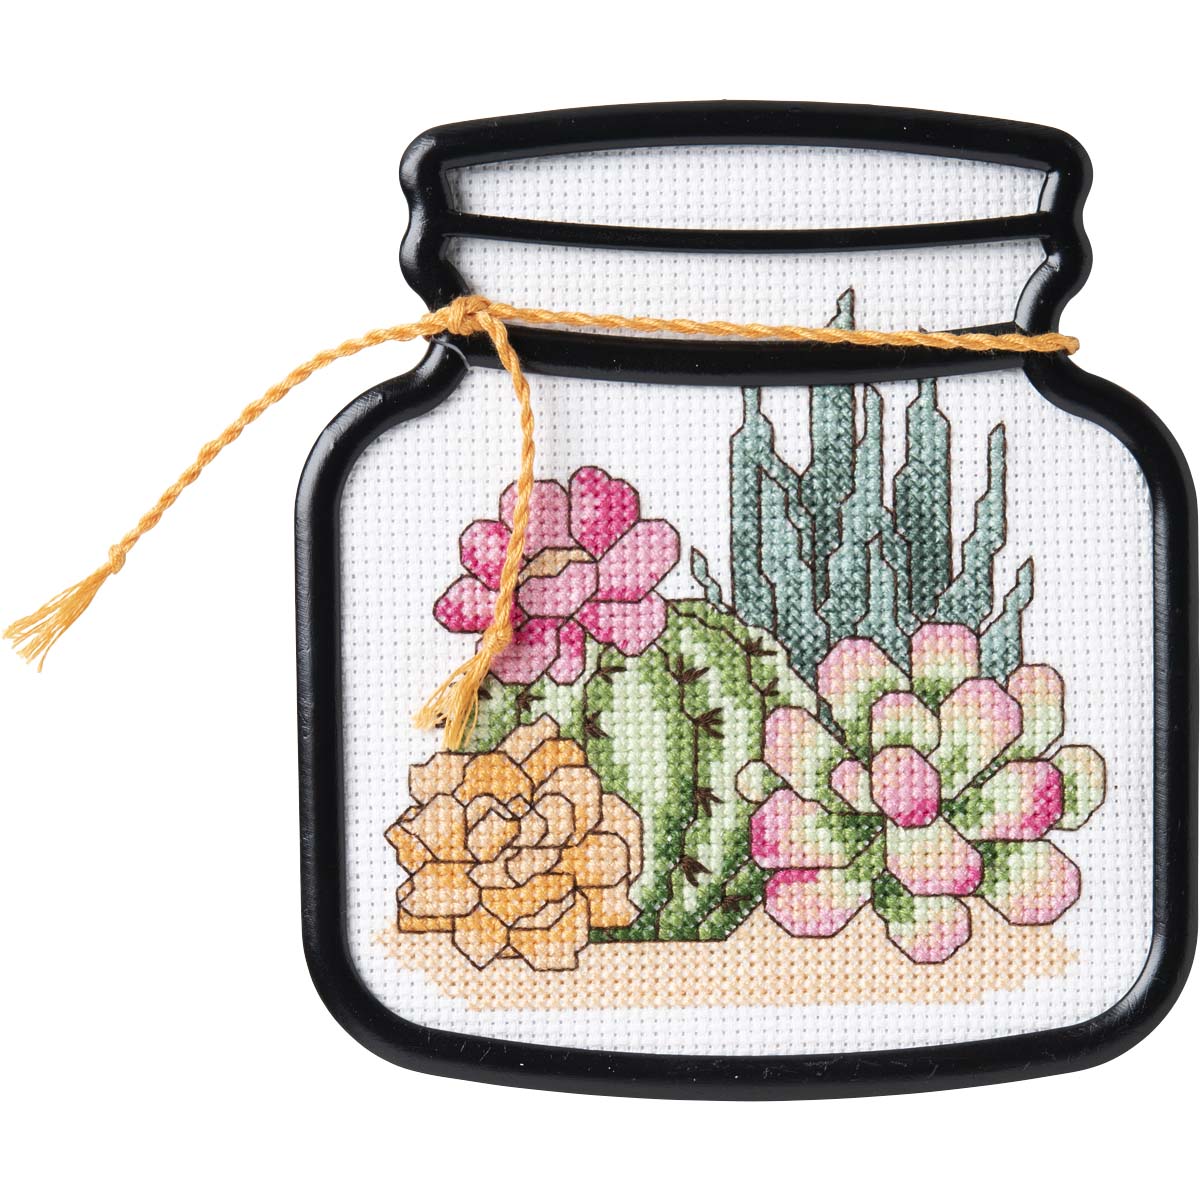 Bucilla ® My 1st Stitch™ - Counted Cross Stitch Kits - Terrarium Frame - Cactus - 47908E